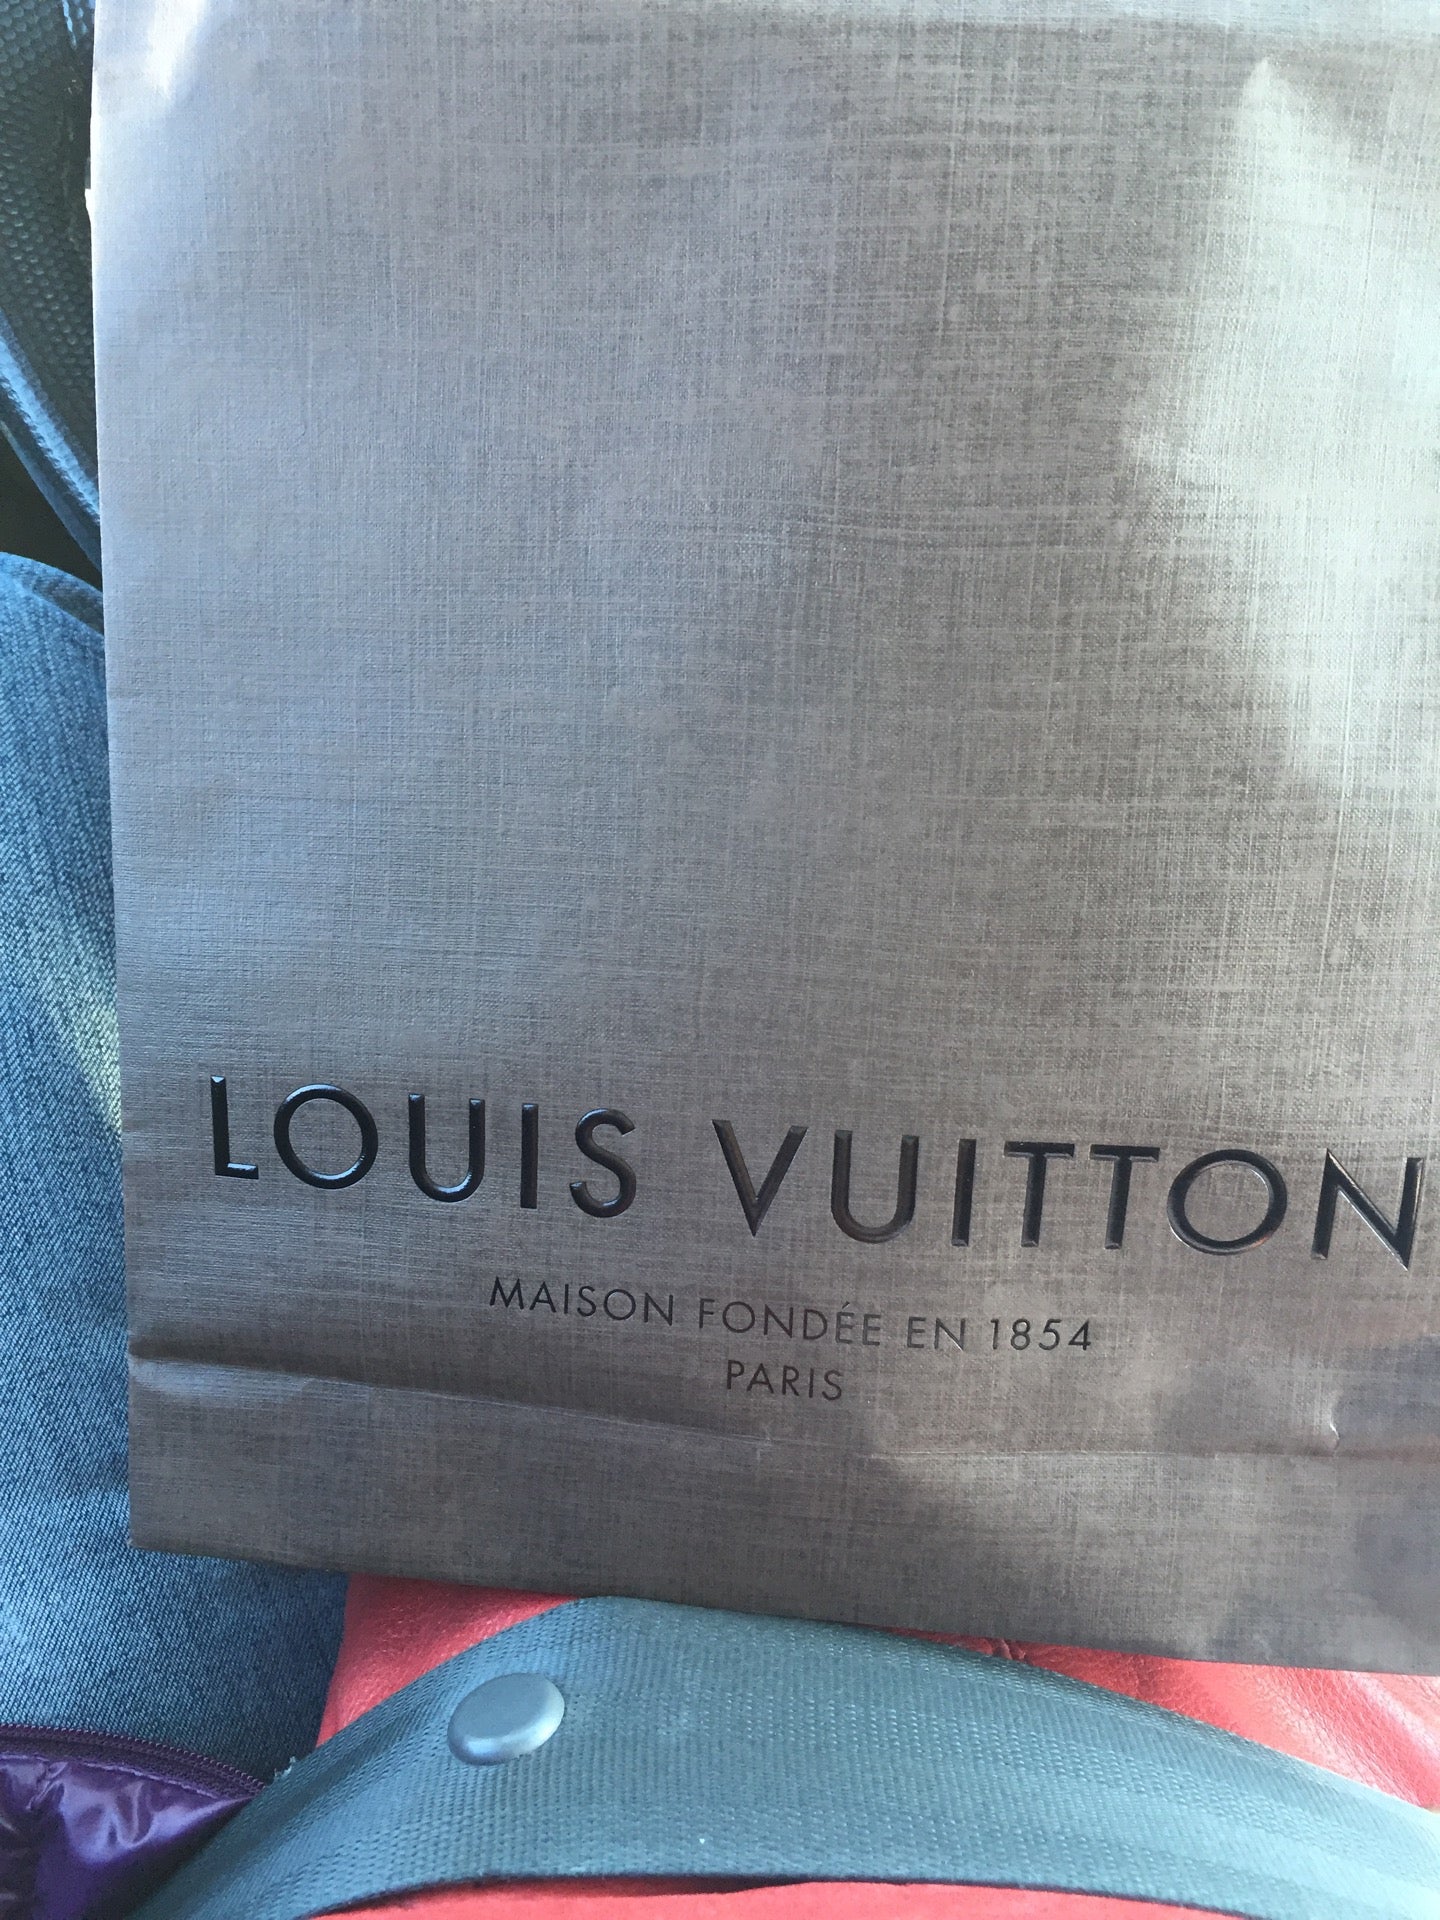 Louis Vuitton Birmingham Saks Geschäft - Vereinigte Staaten